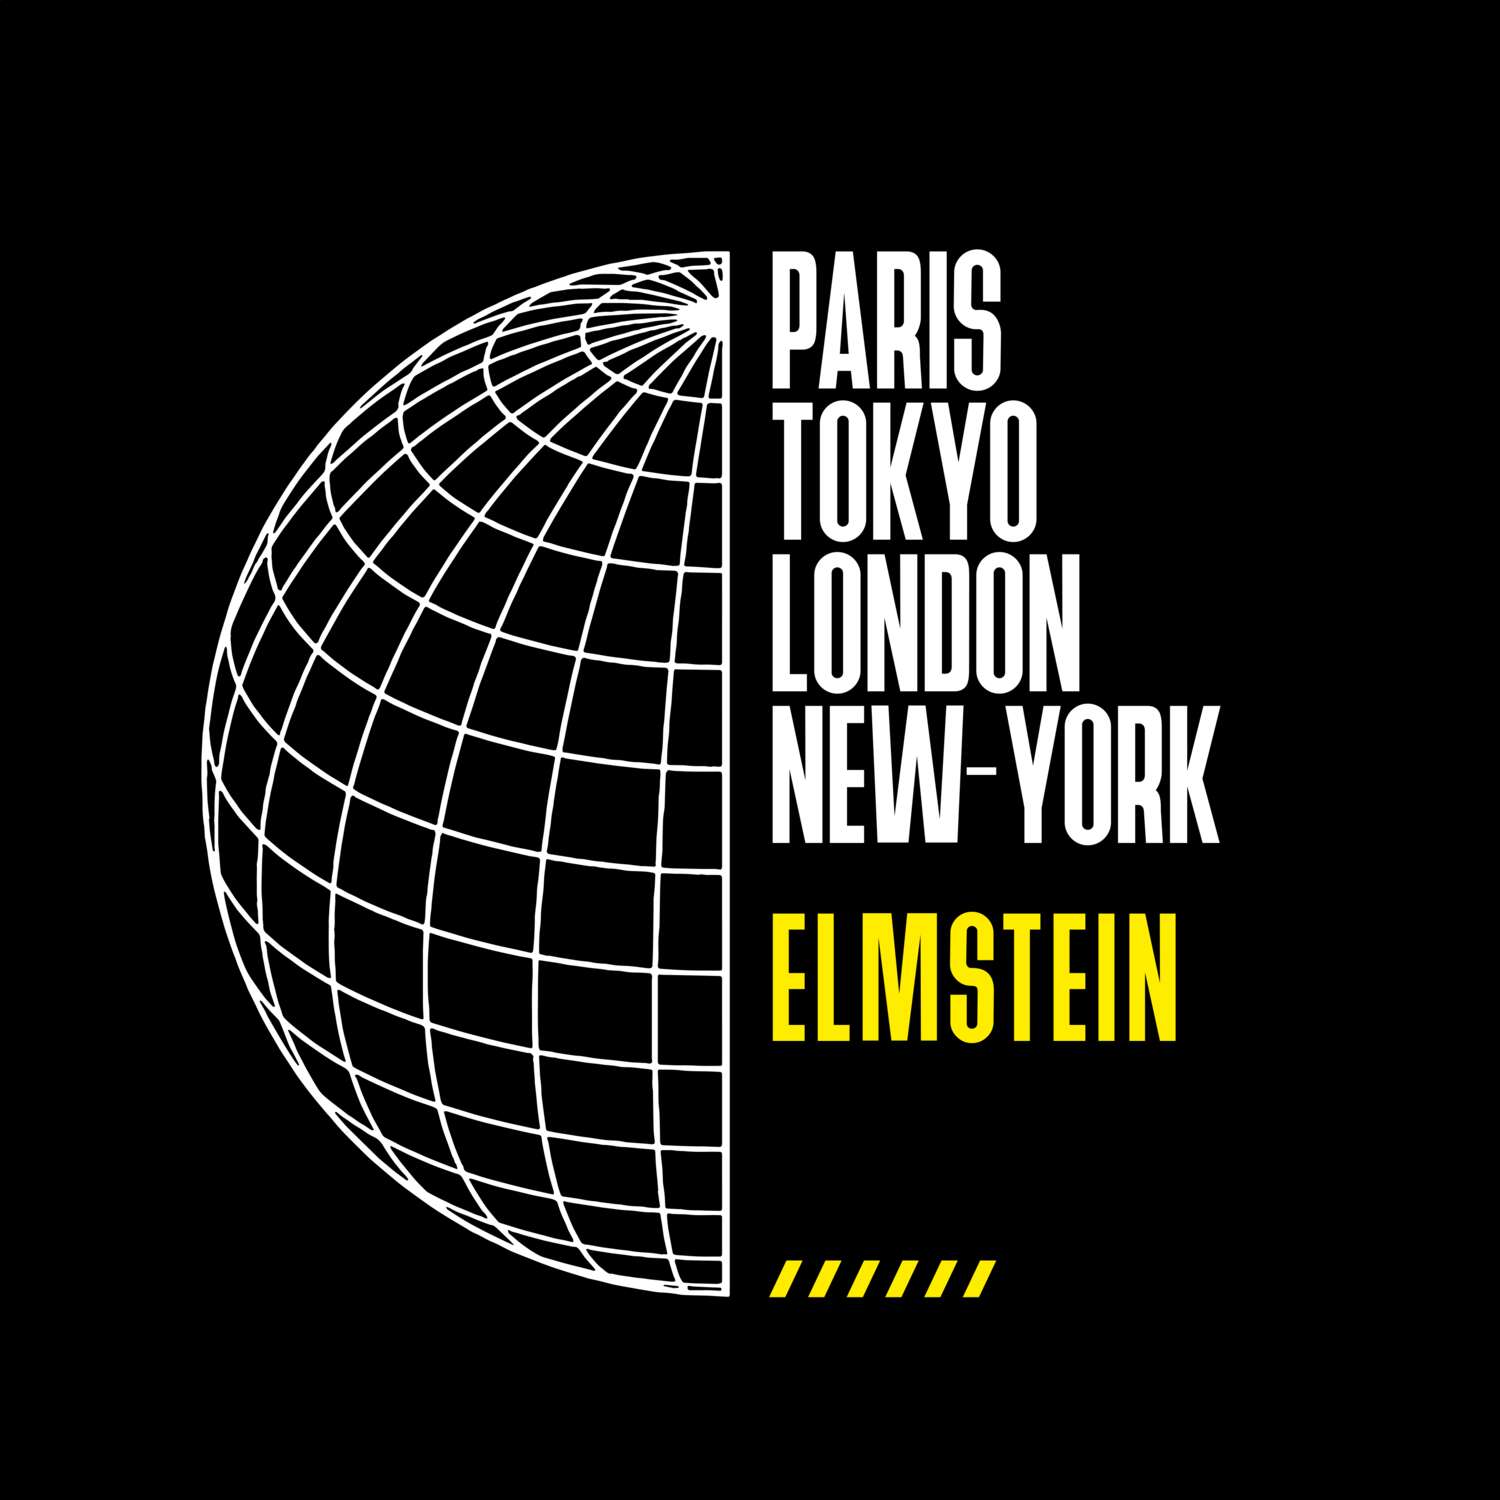 Elmstein T-Shirt »Paris Tokyo London«